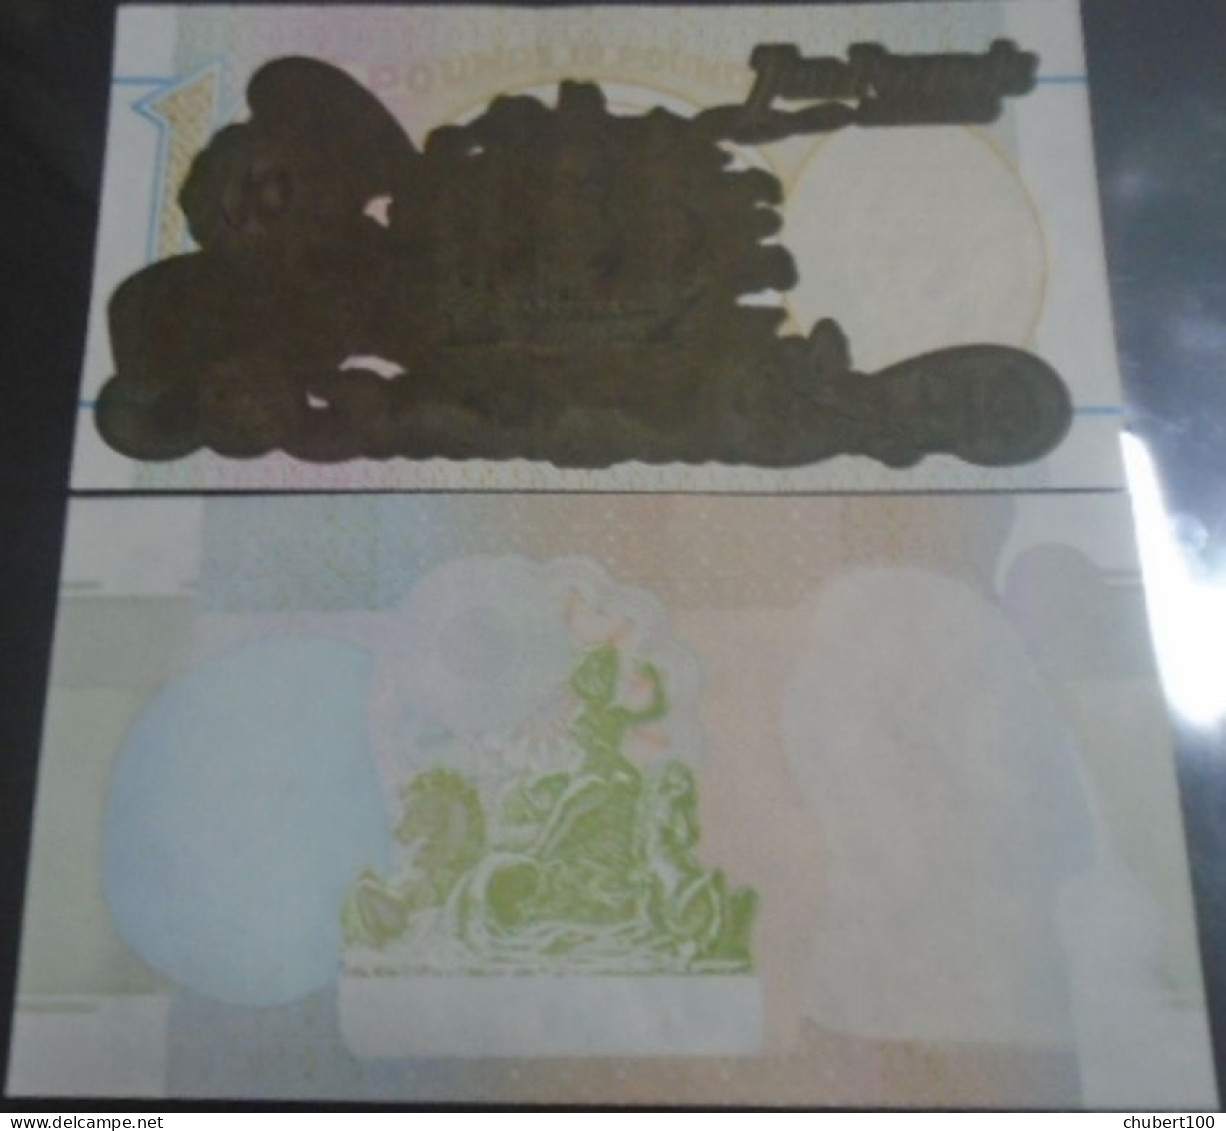 IRELAND NORTHERN,   First Trust Bank,  P 136b   £10, 2012,  "iridescent" Proof - 10 Pounds